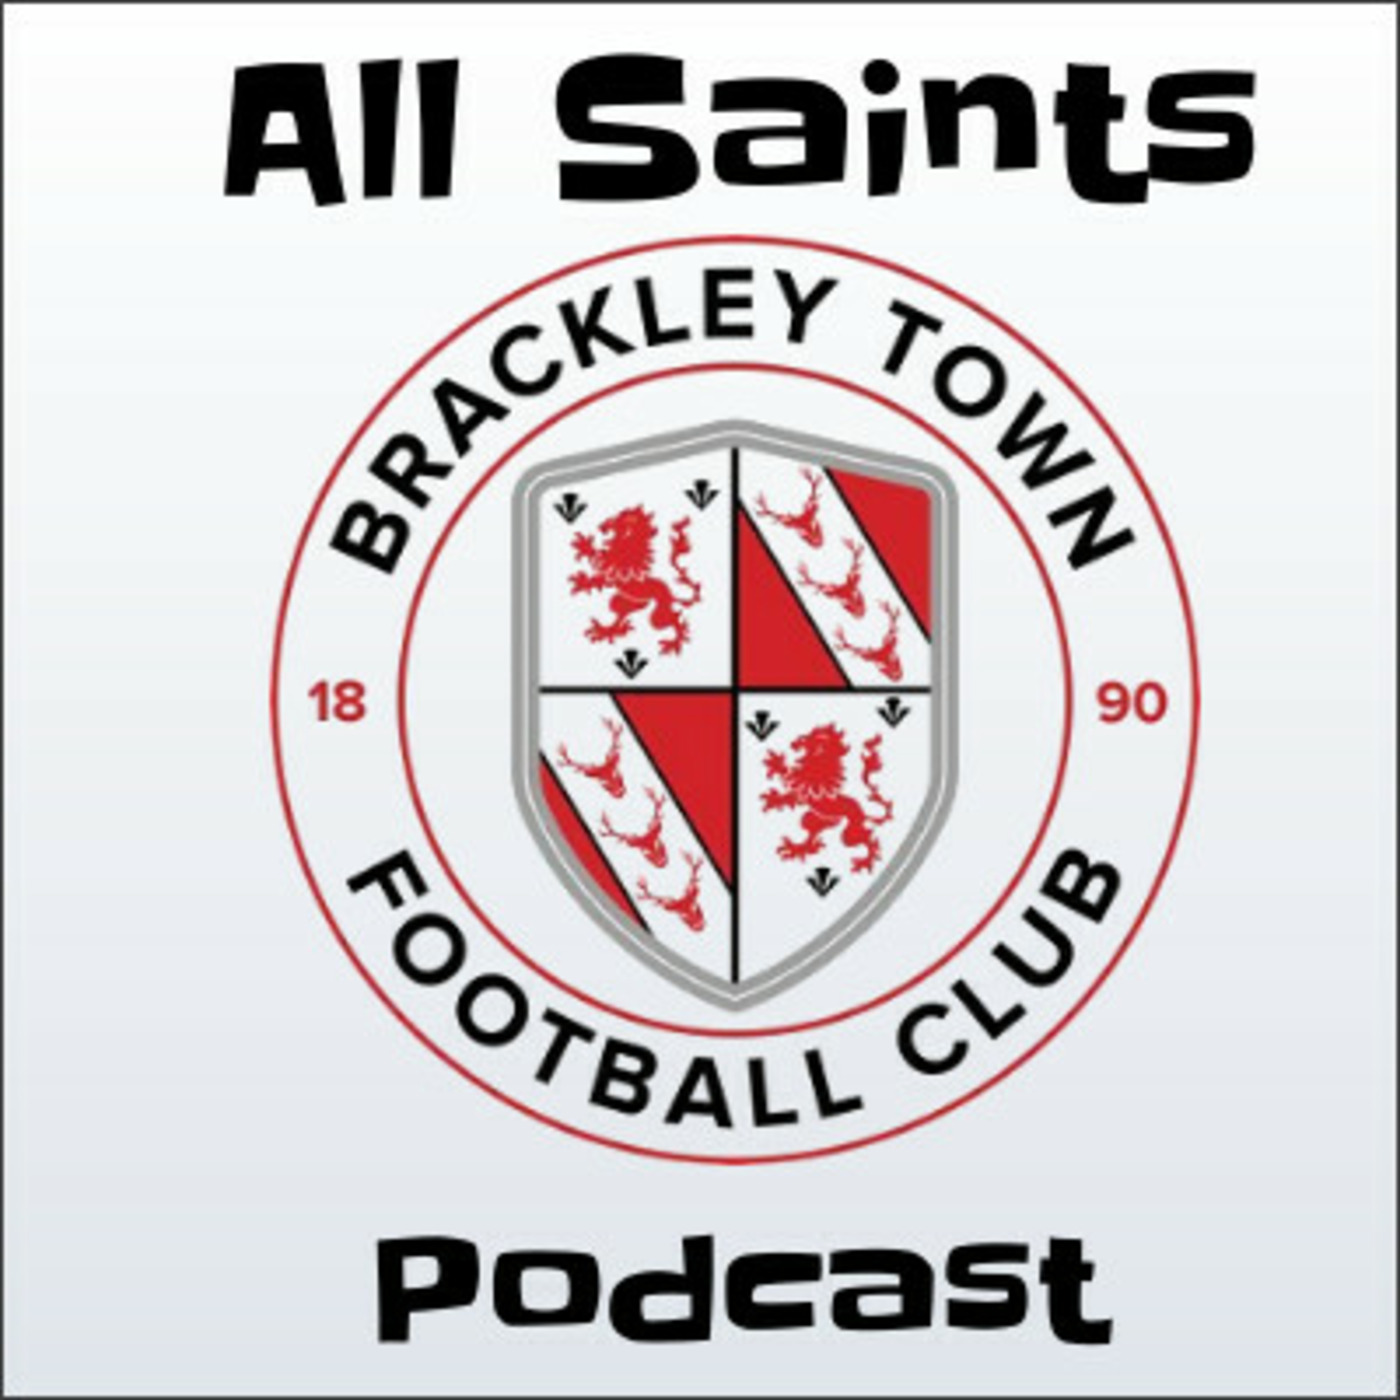 Episode 31: All saints podcast 62